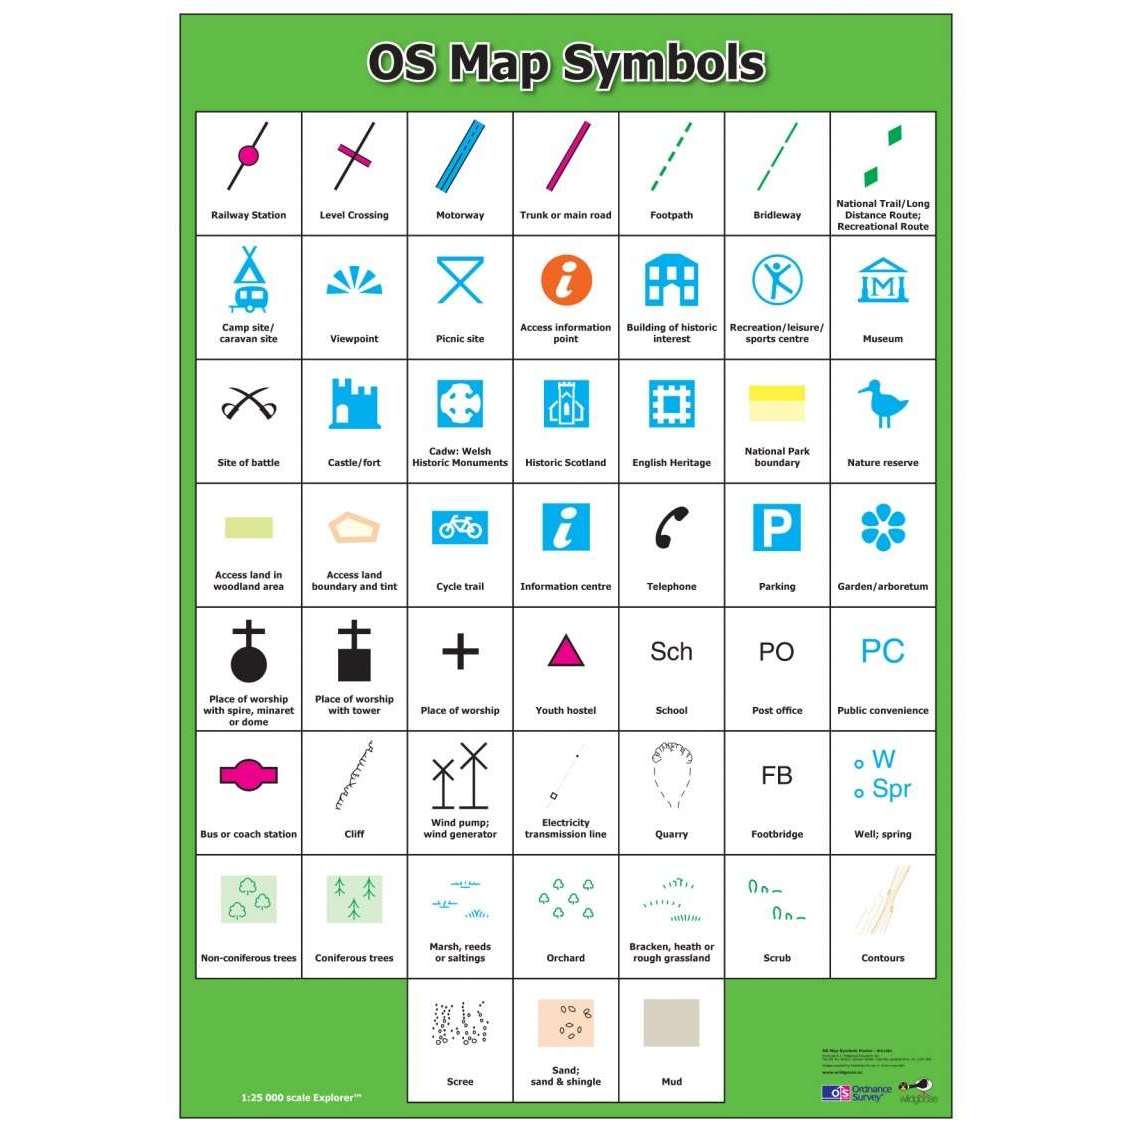 Os Map Symbols Poster Wg4381 15756135 1200x1200 ?v=1542843915